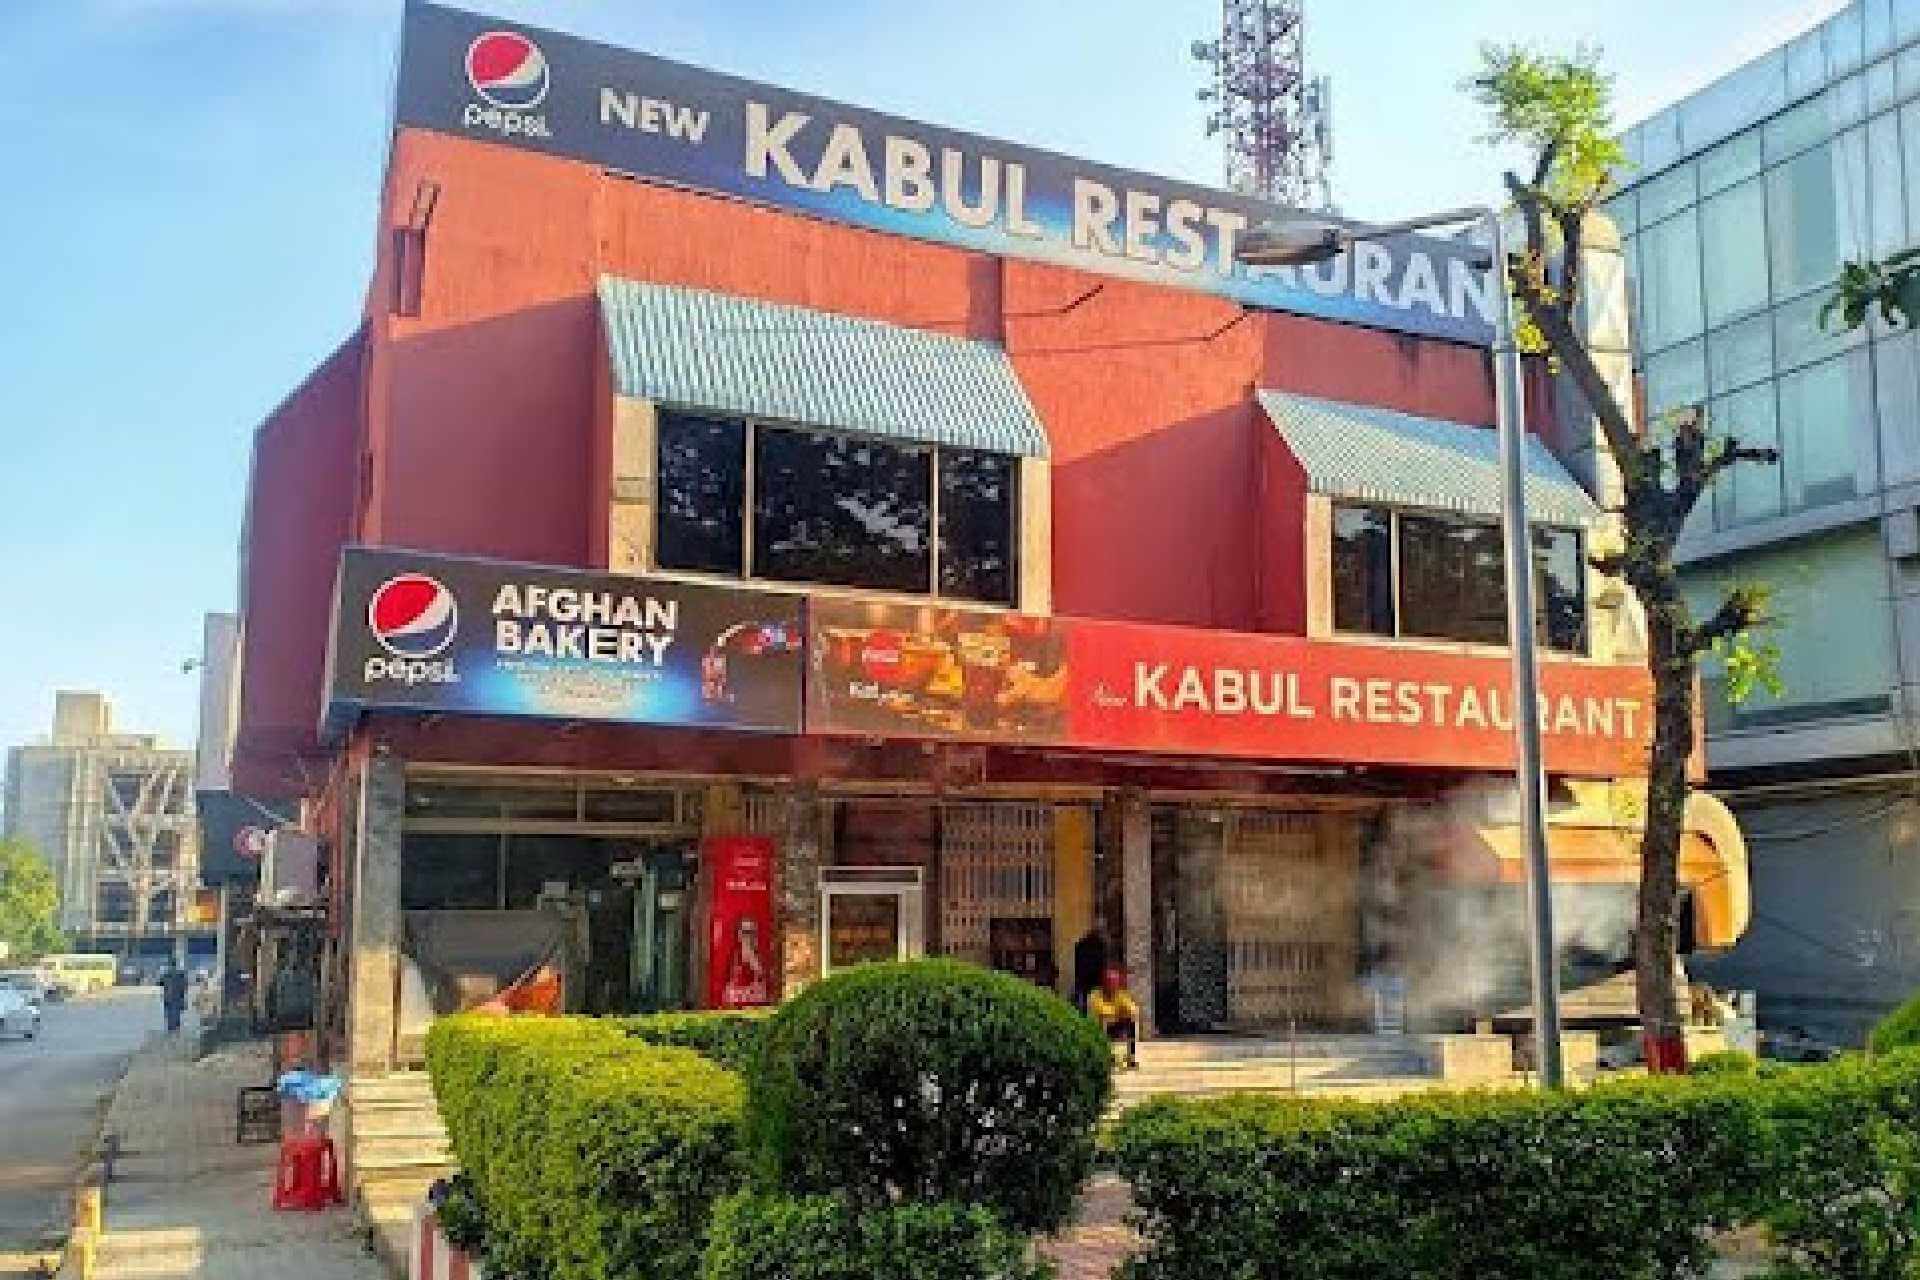 Kabul Restaurant Islamabad